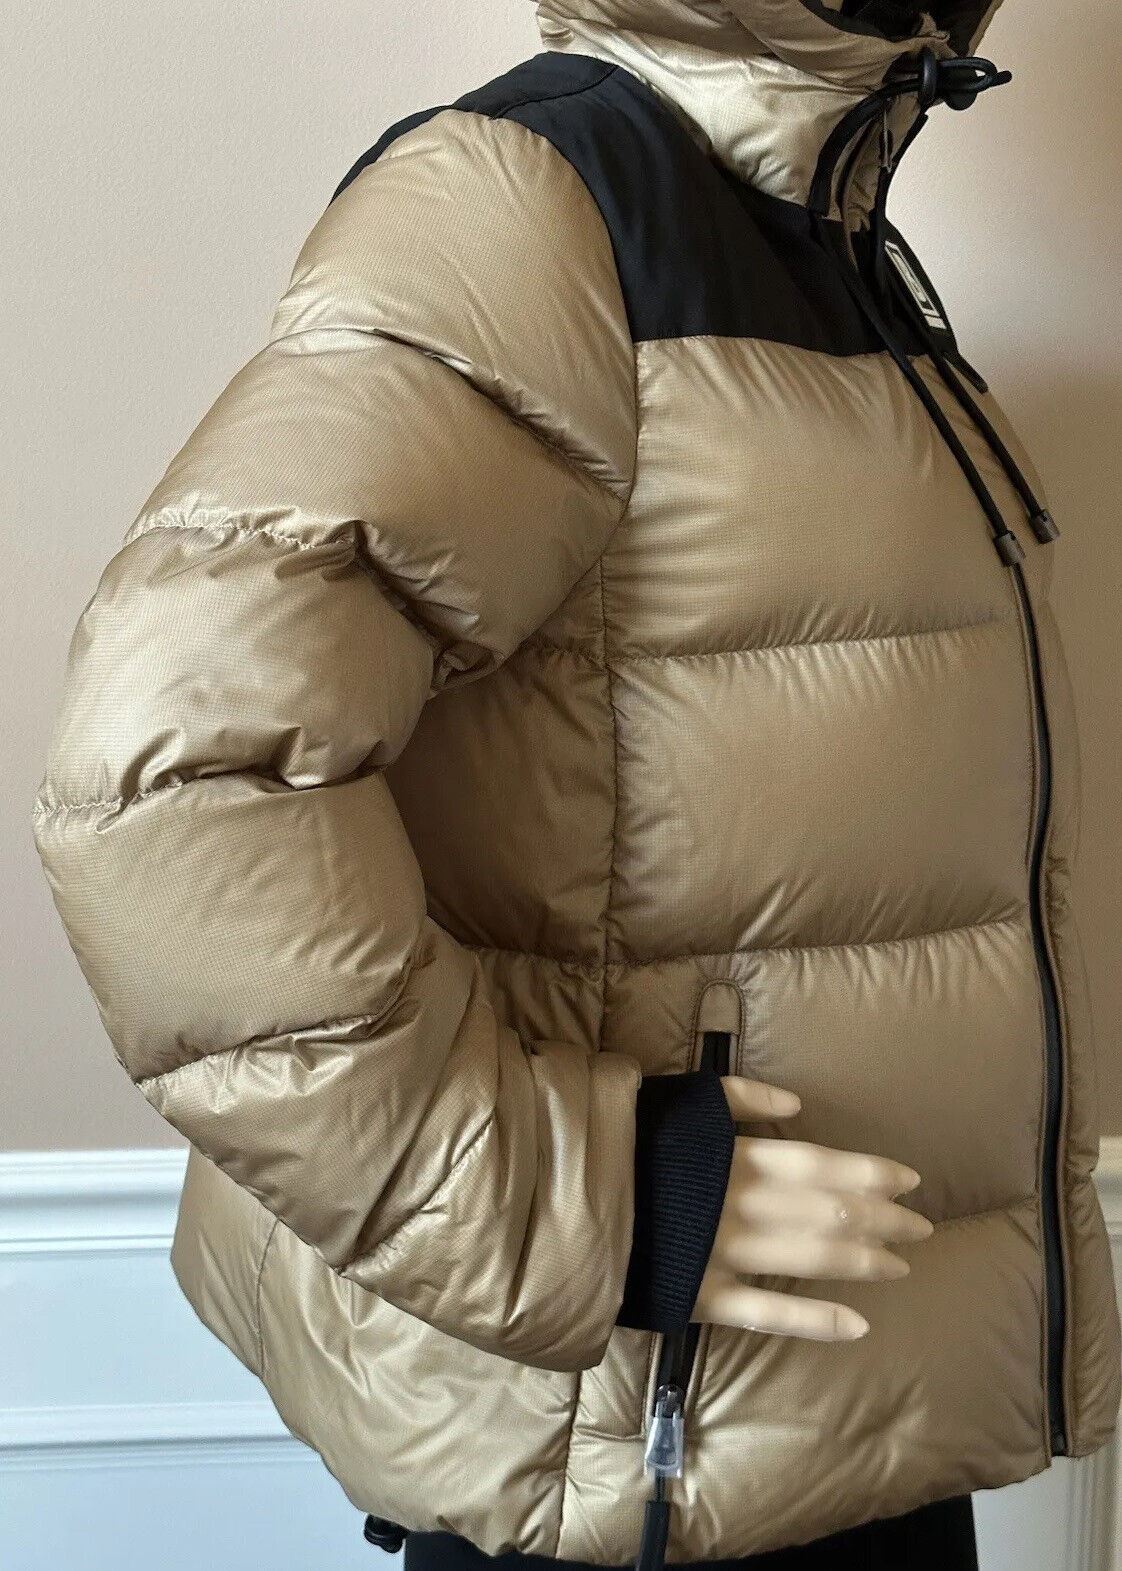 NWT $1350 Burberry London Women's Hooded Puffer Jacket Soft Fawn Medium 8061337